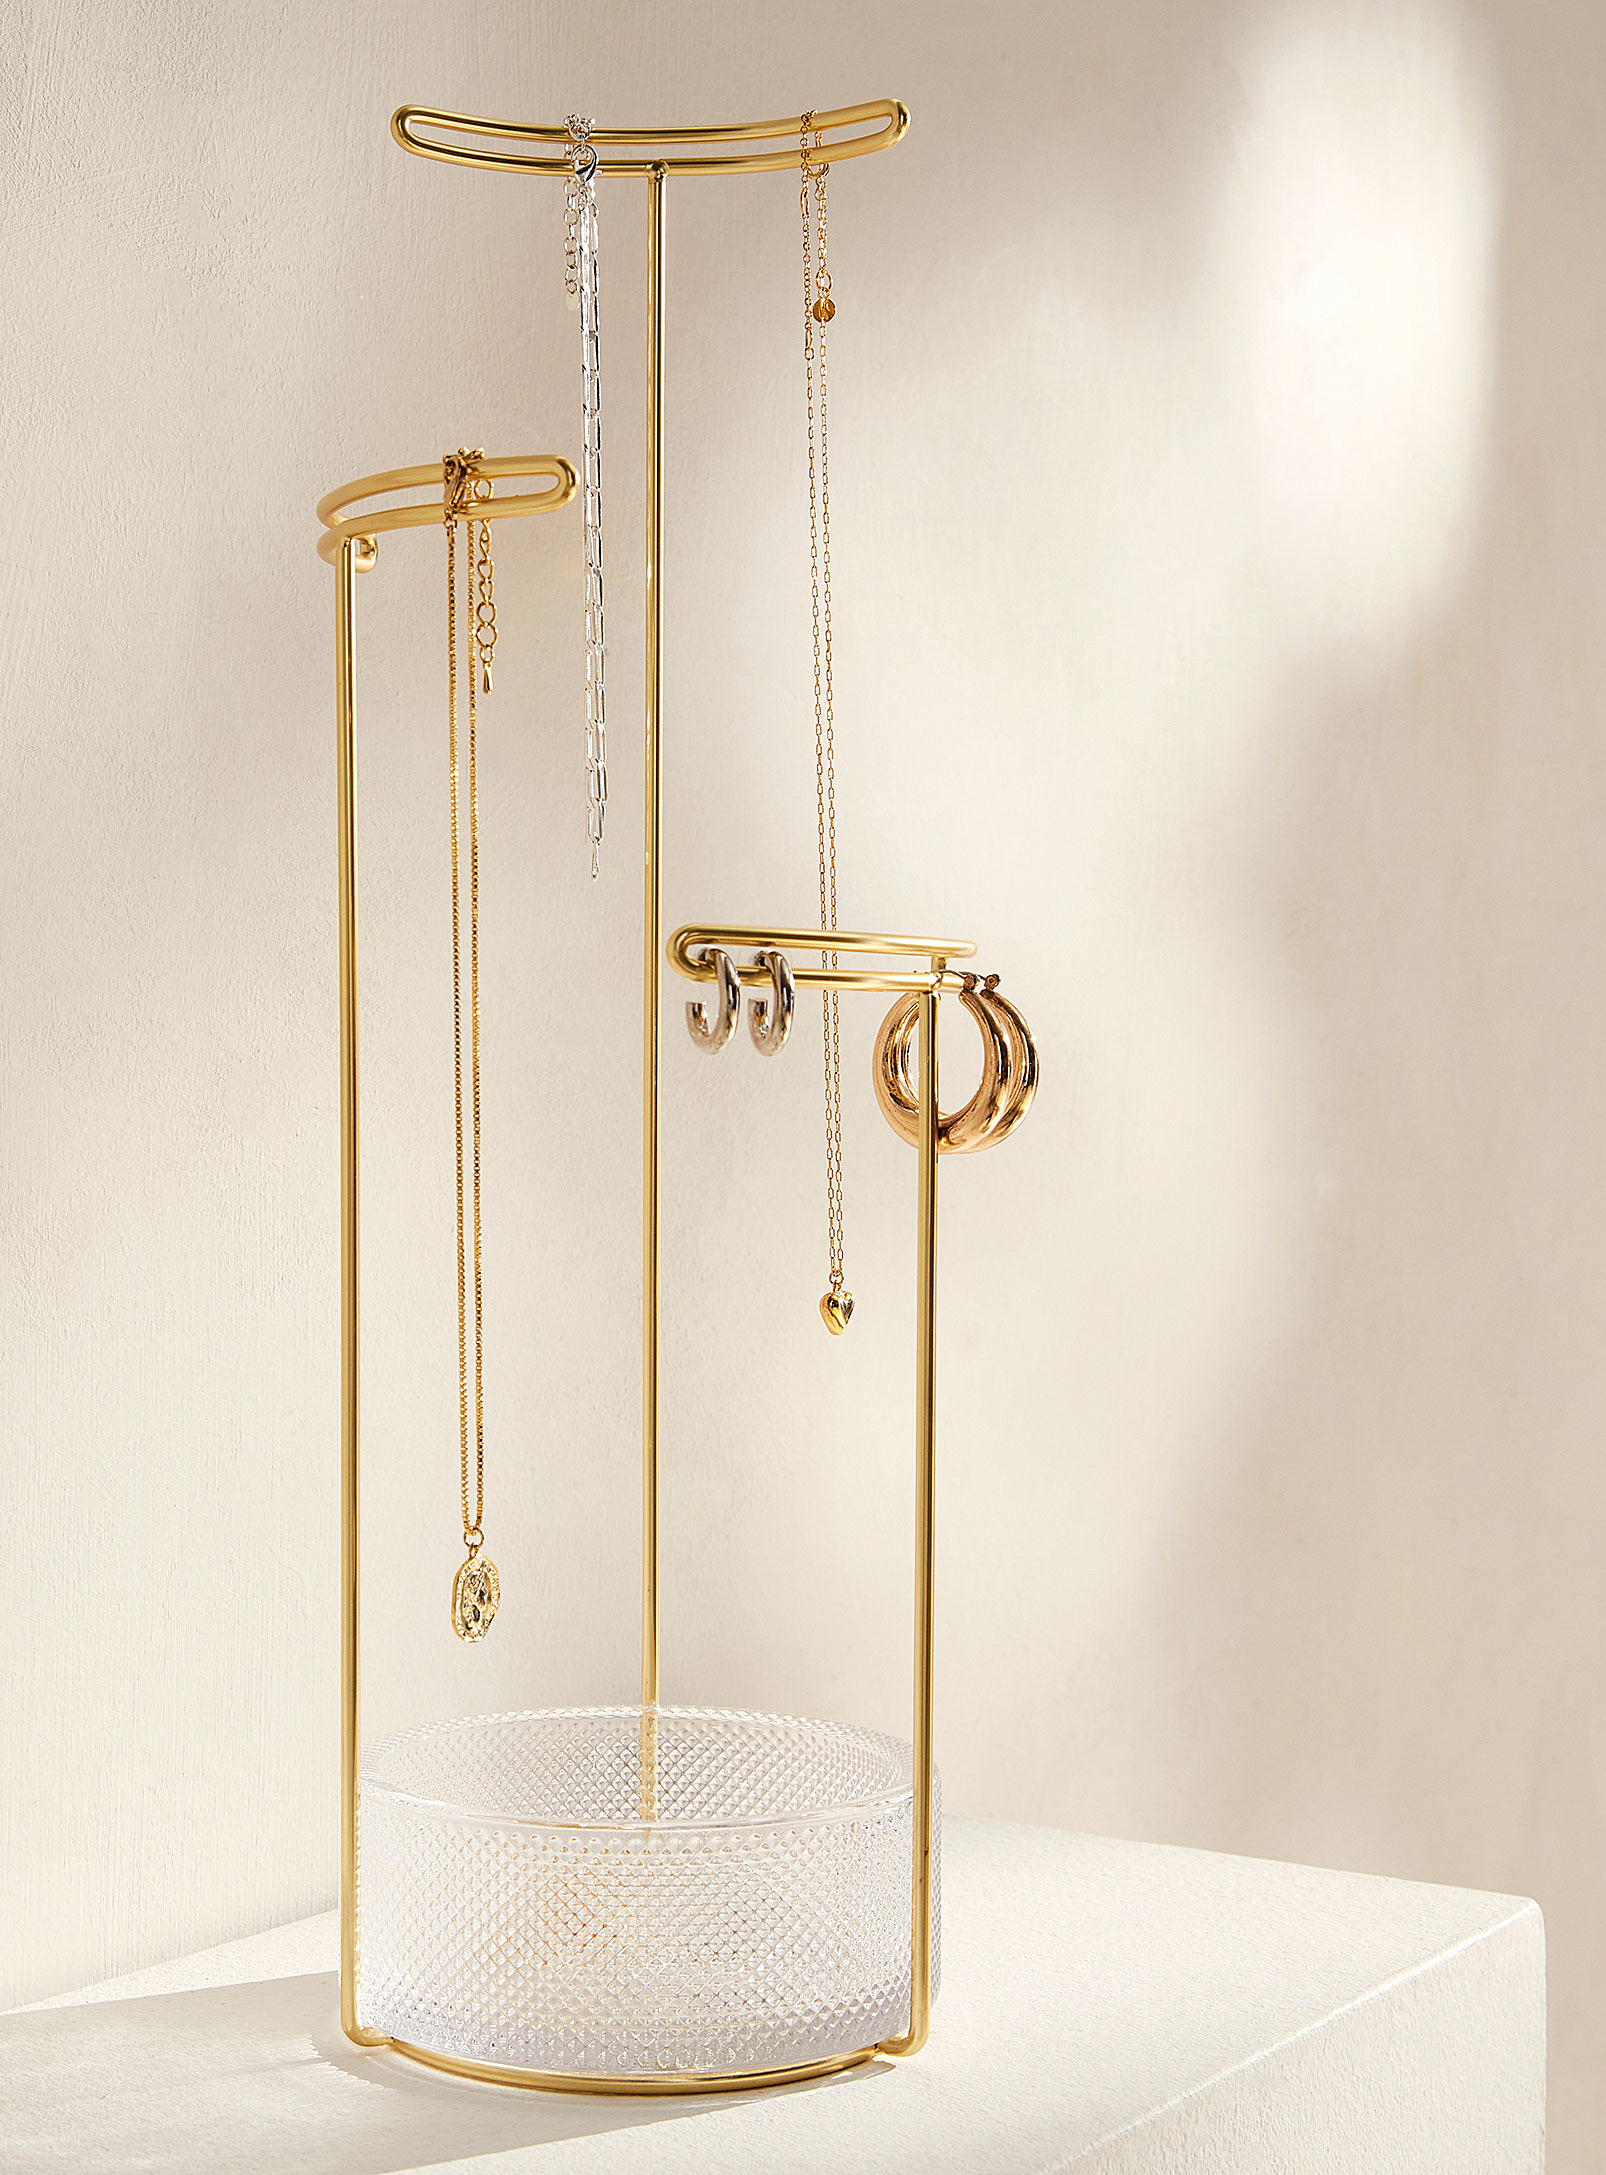 Umbra - Gold and glass jewellery display rack